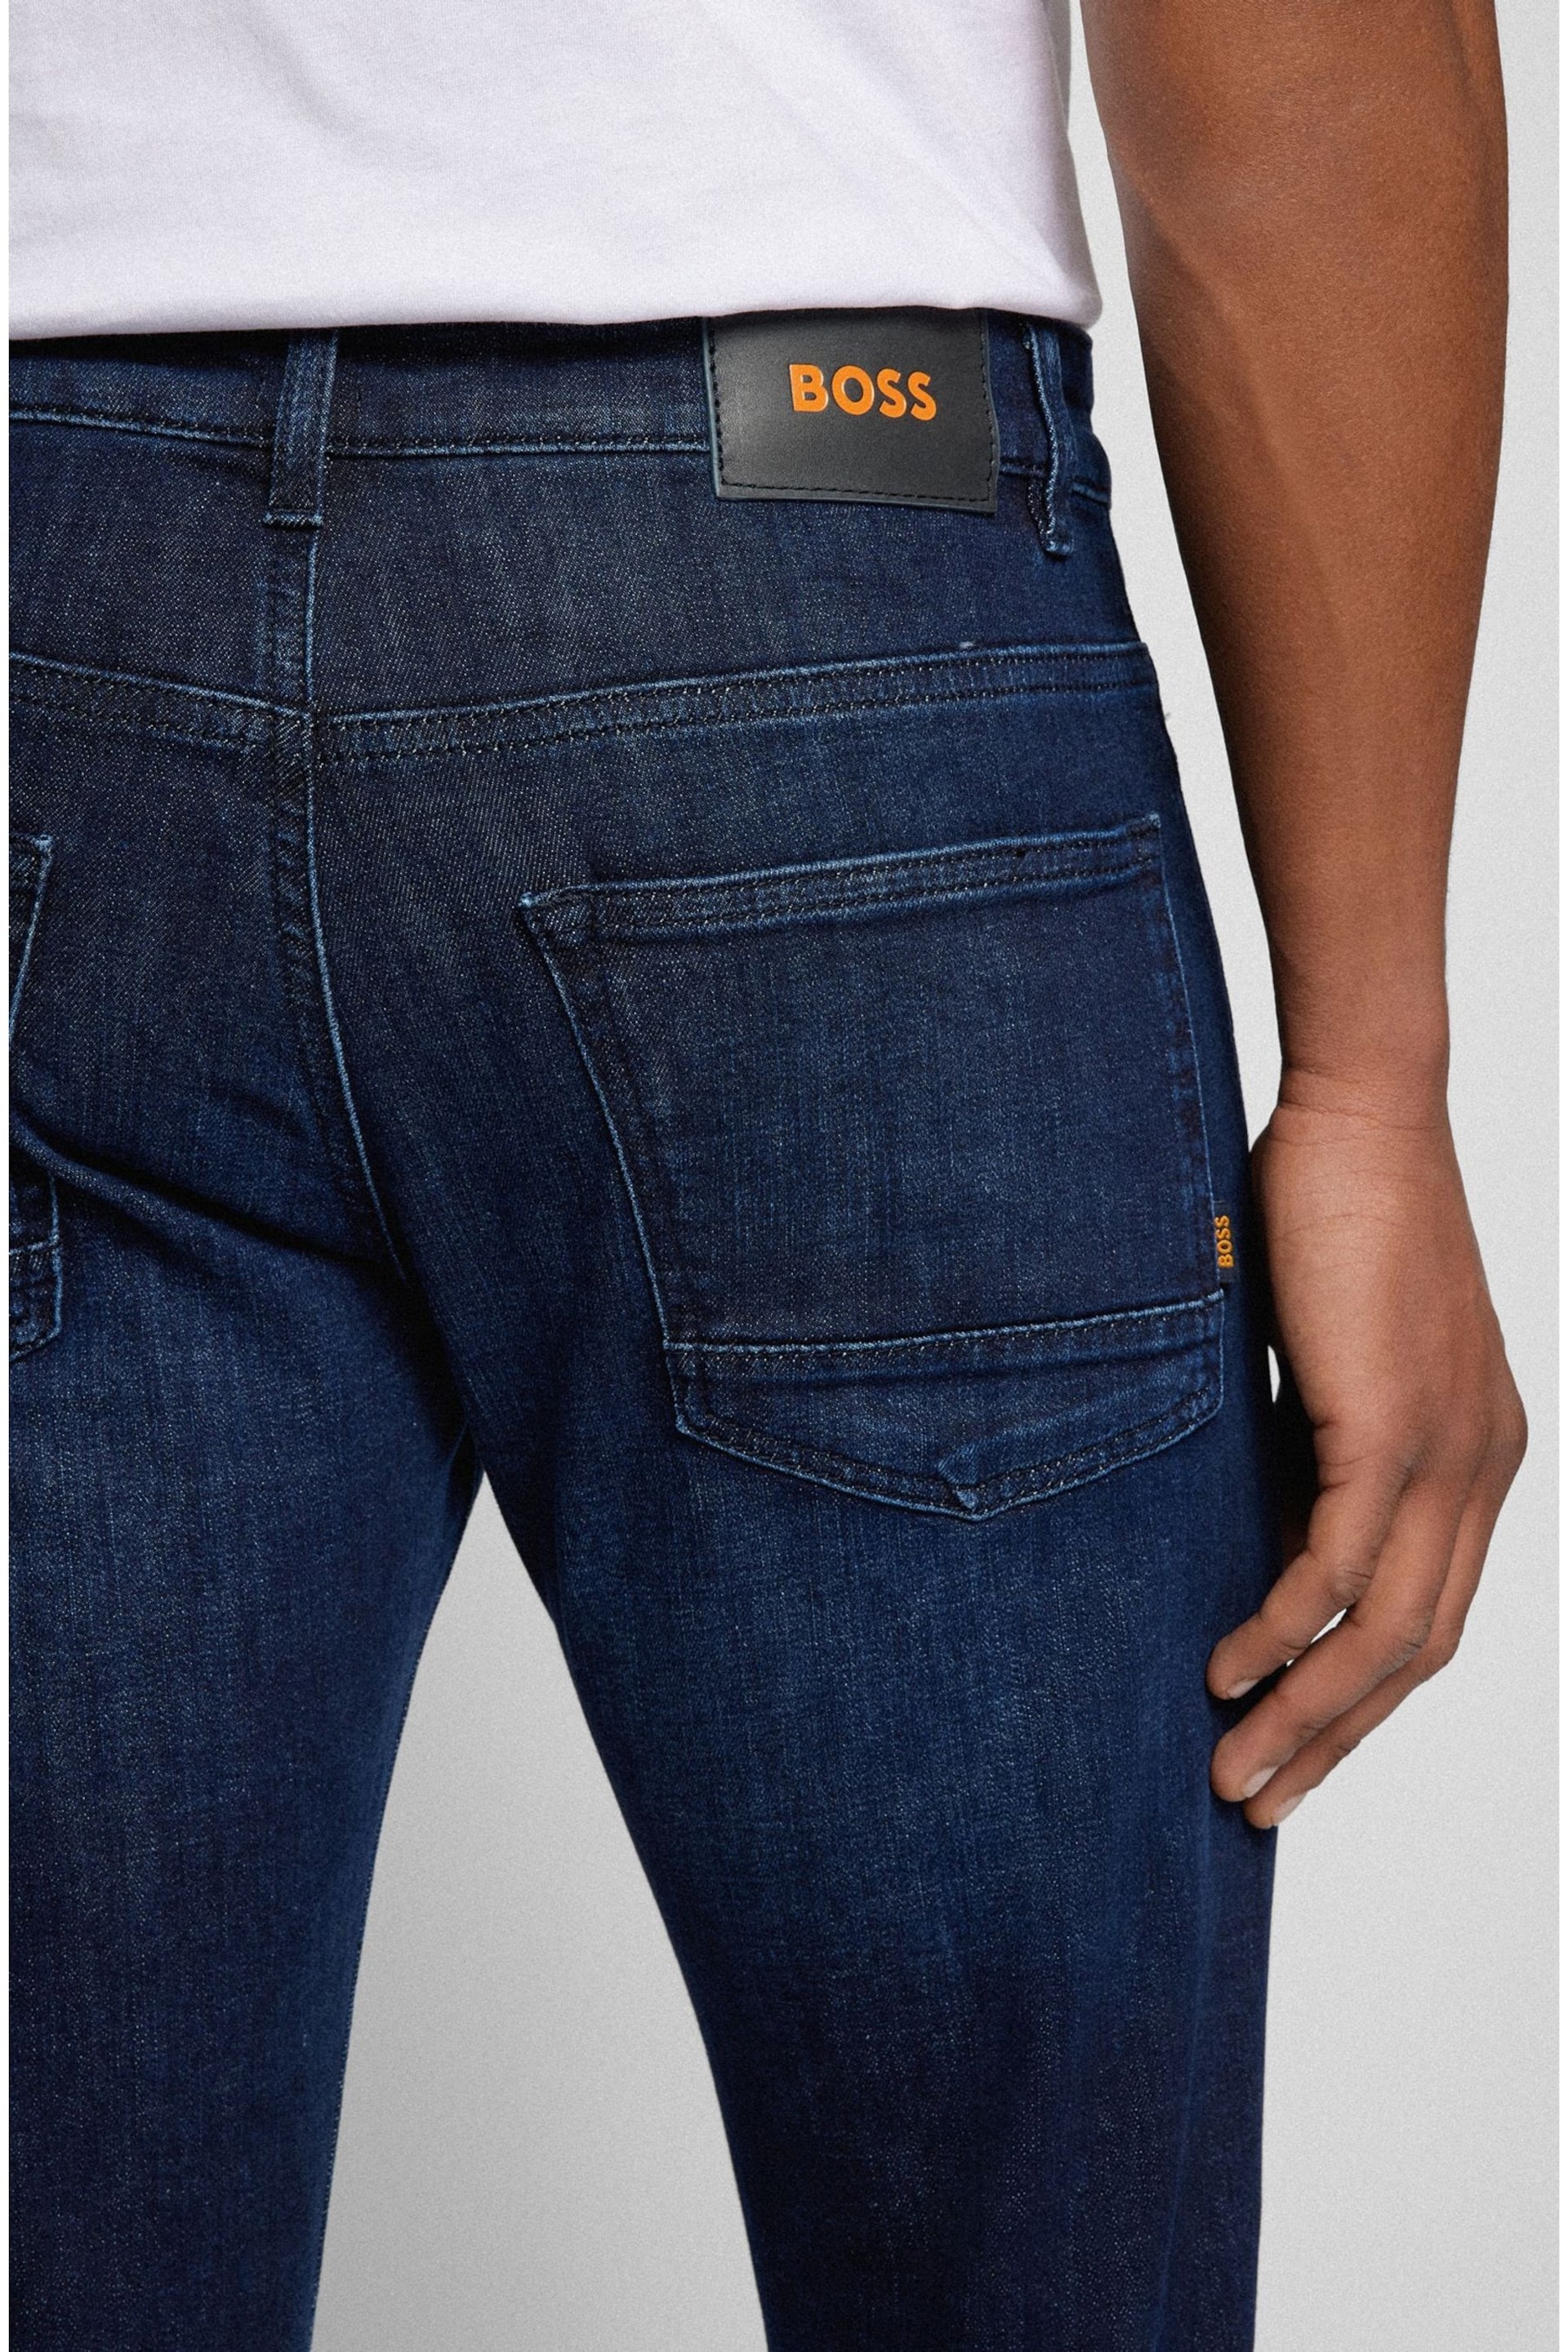 BOSS Dark Blue Slim Fit Comfort Stretch Denim Jeans - Image 4 of 5